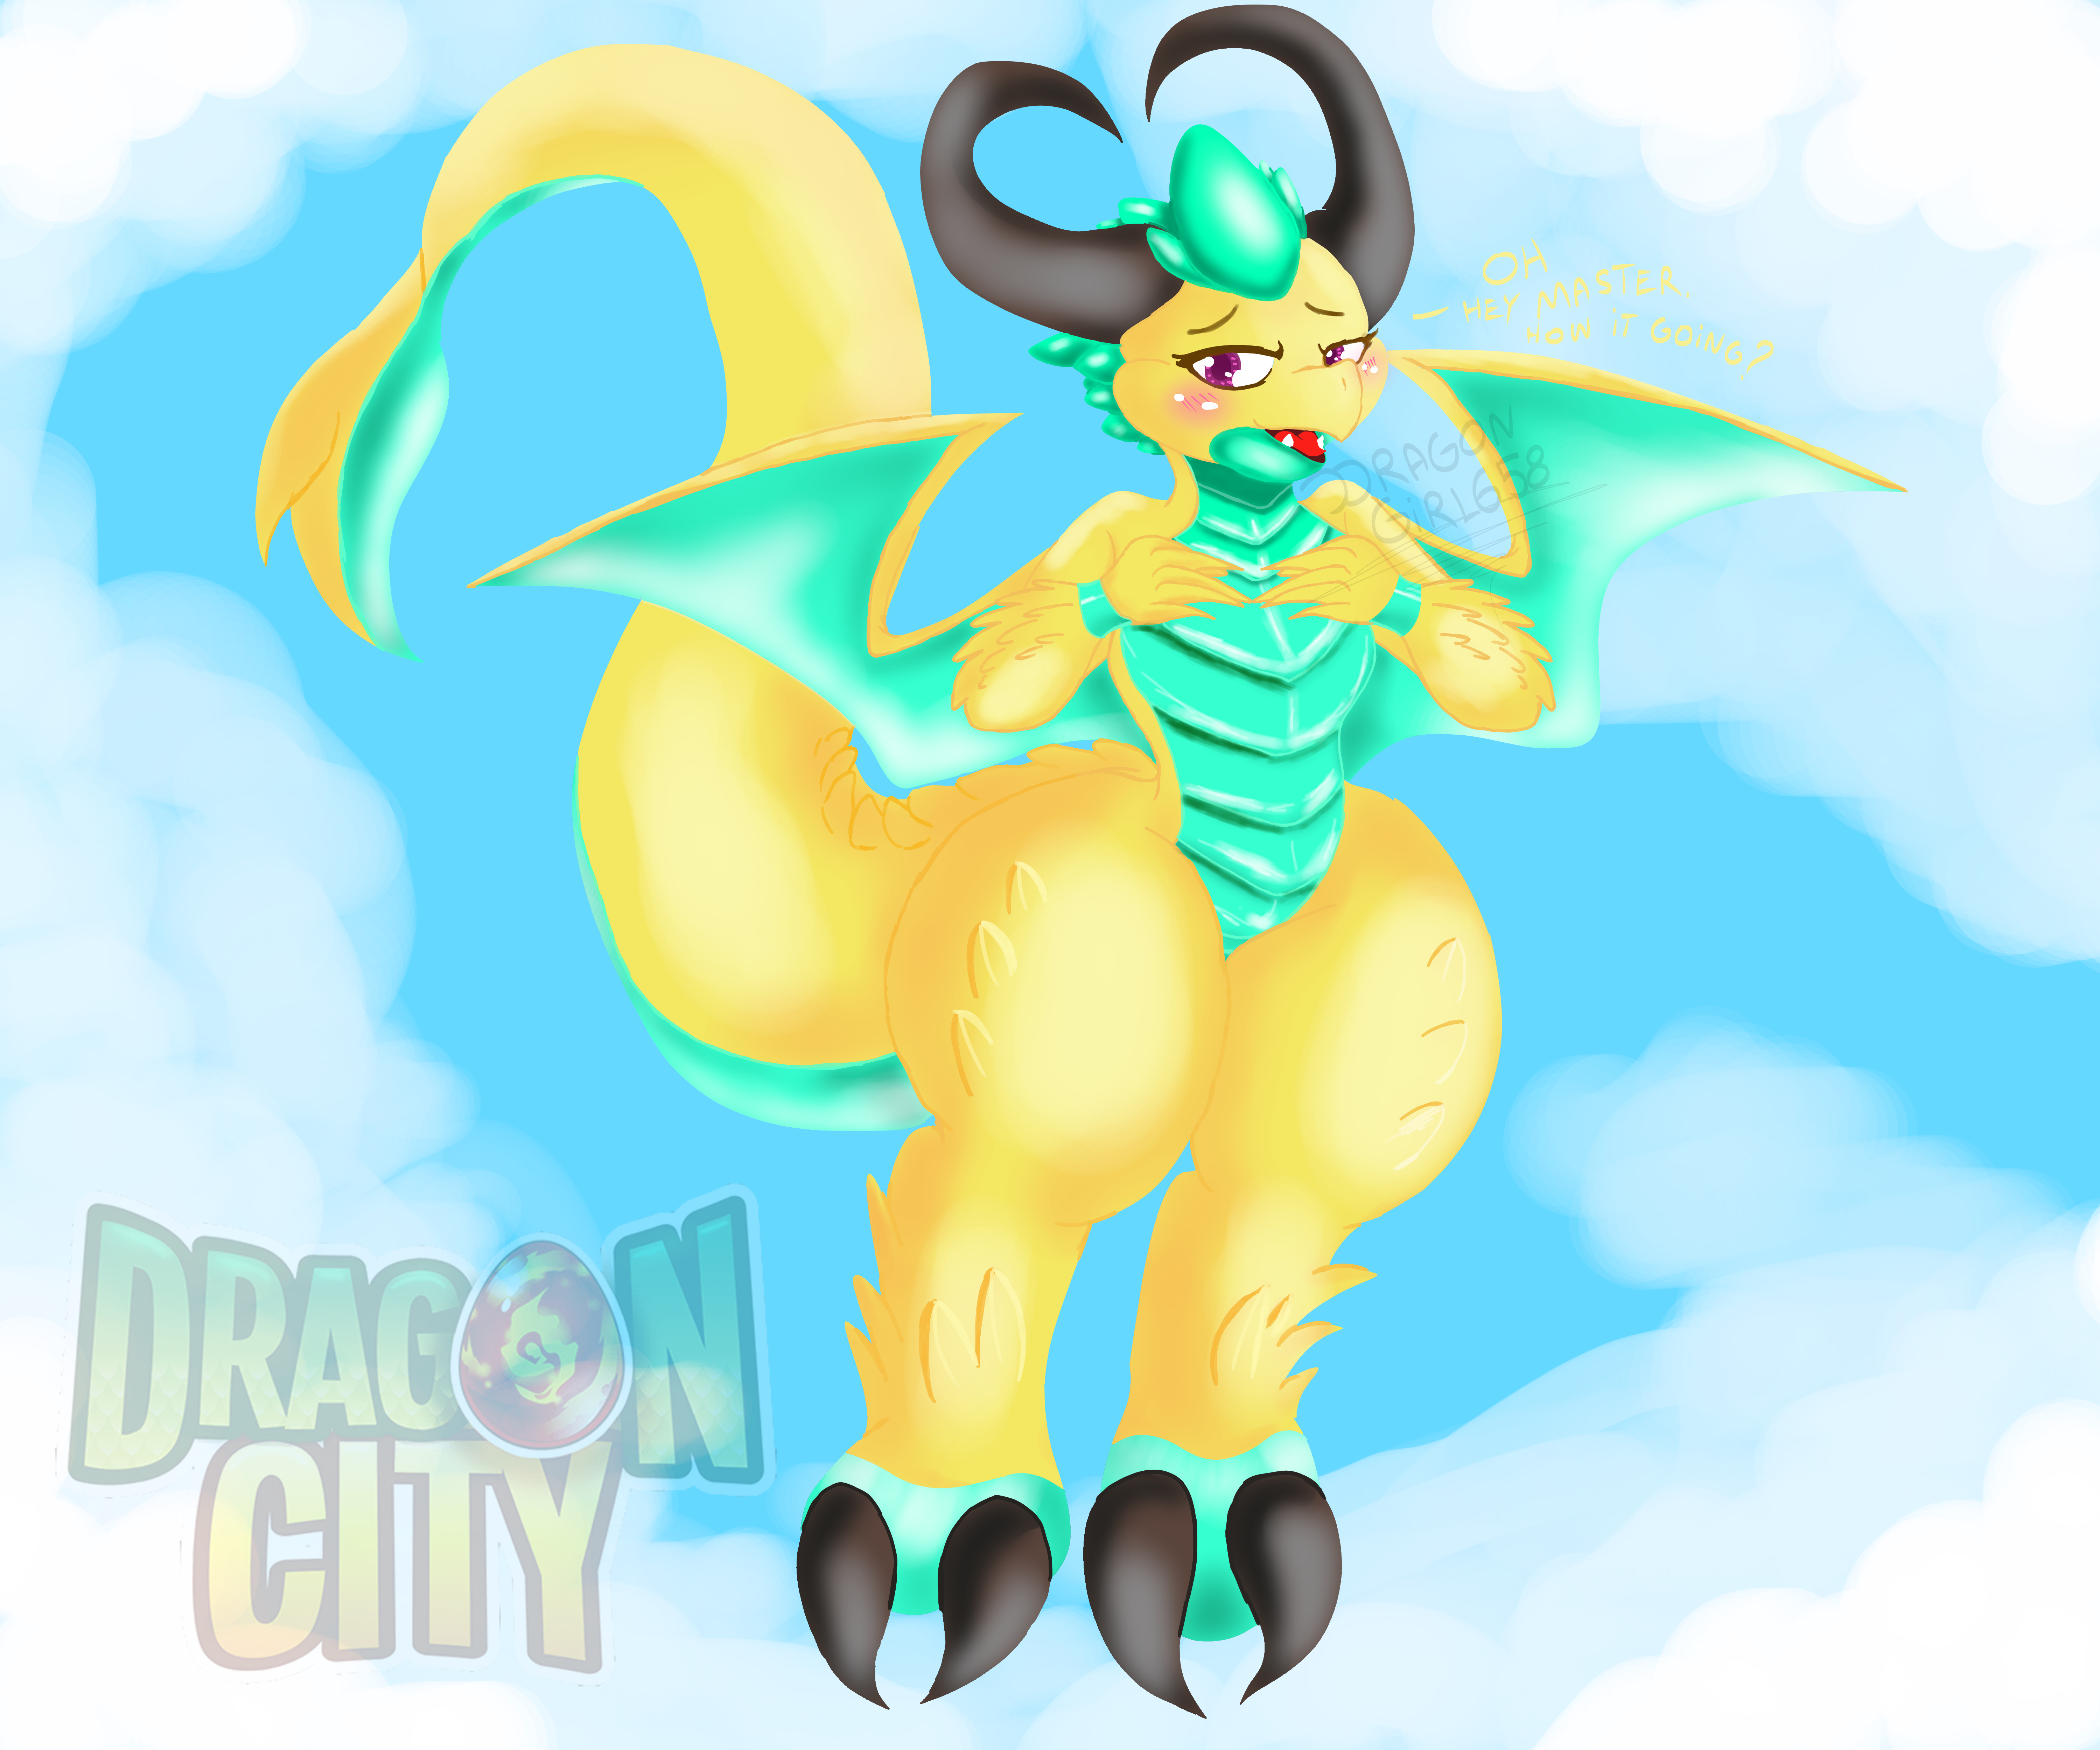 wind dragon dragon city